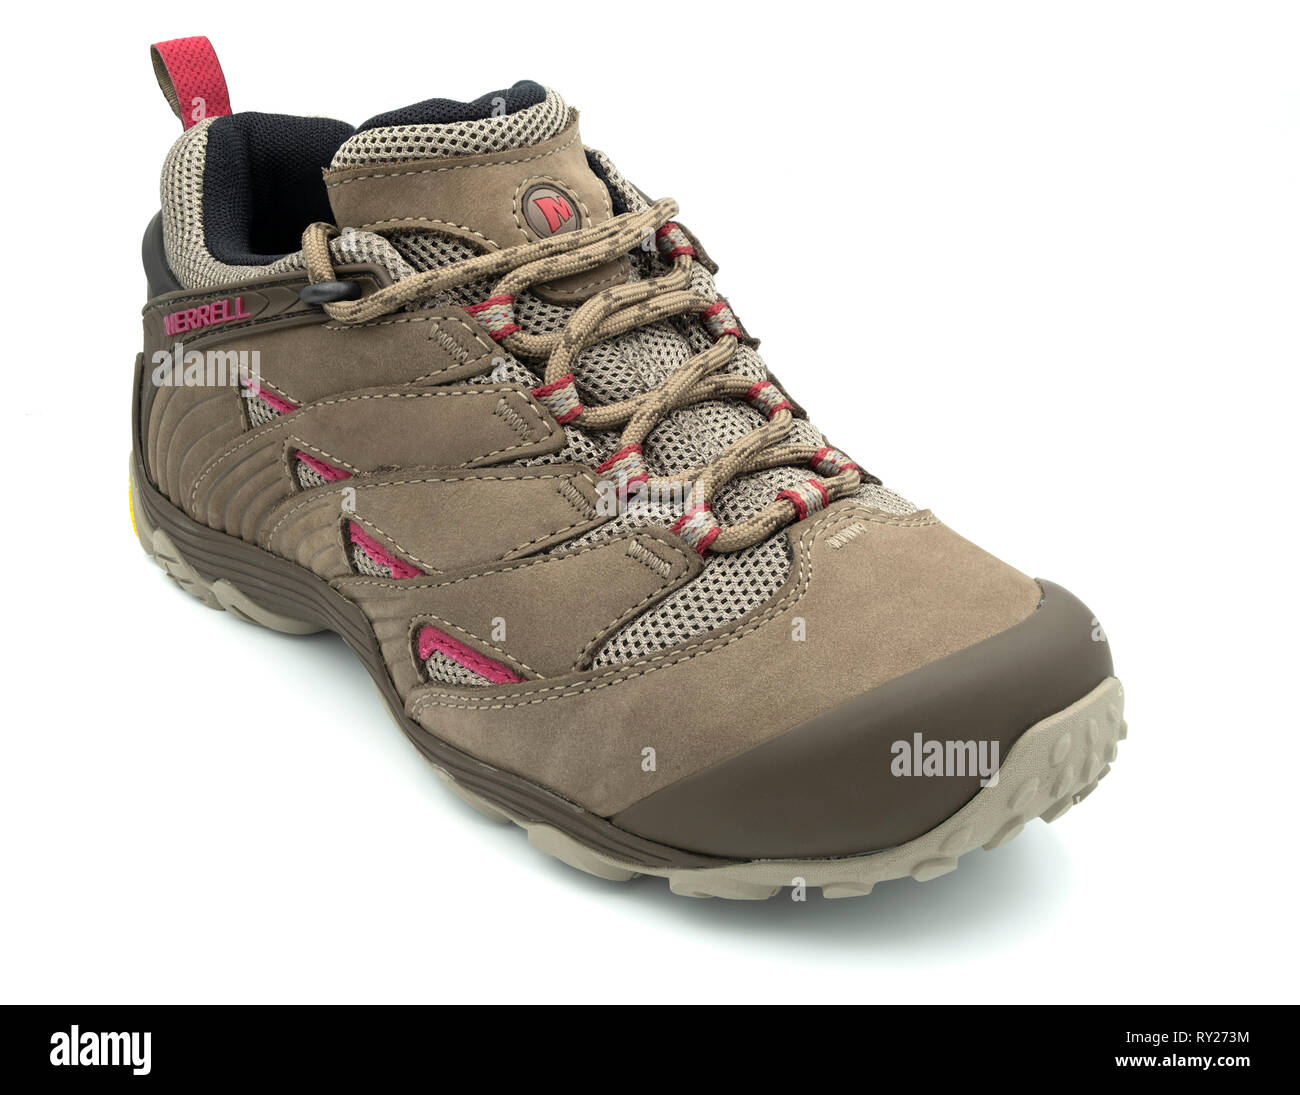 Merrell trekking shoe cutout isolated on white background Stock Photo -  Alamy